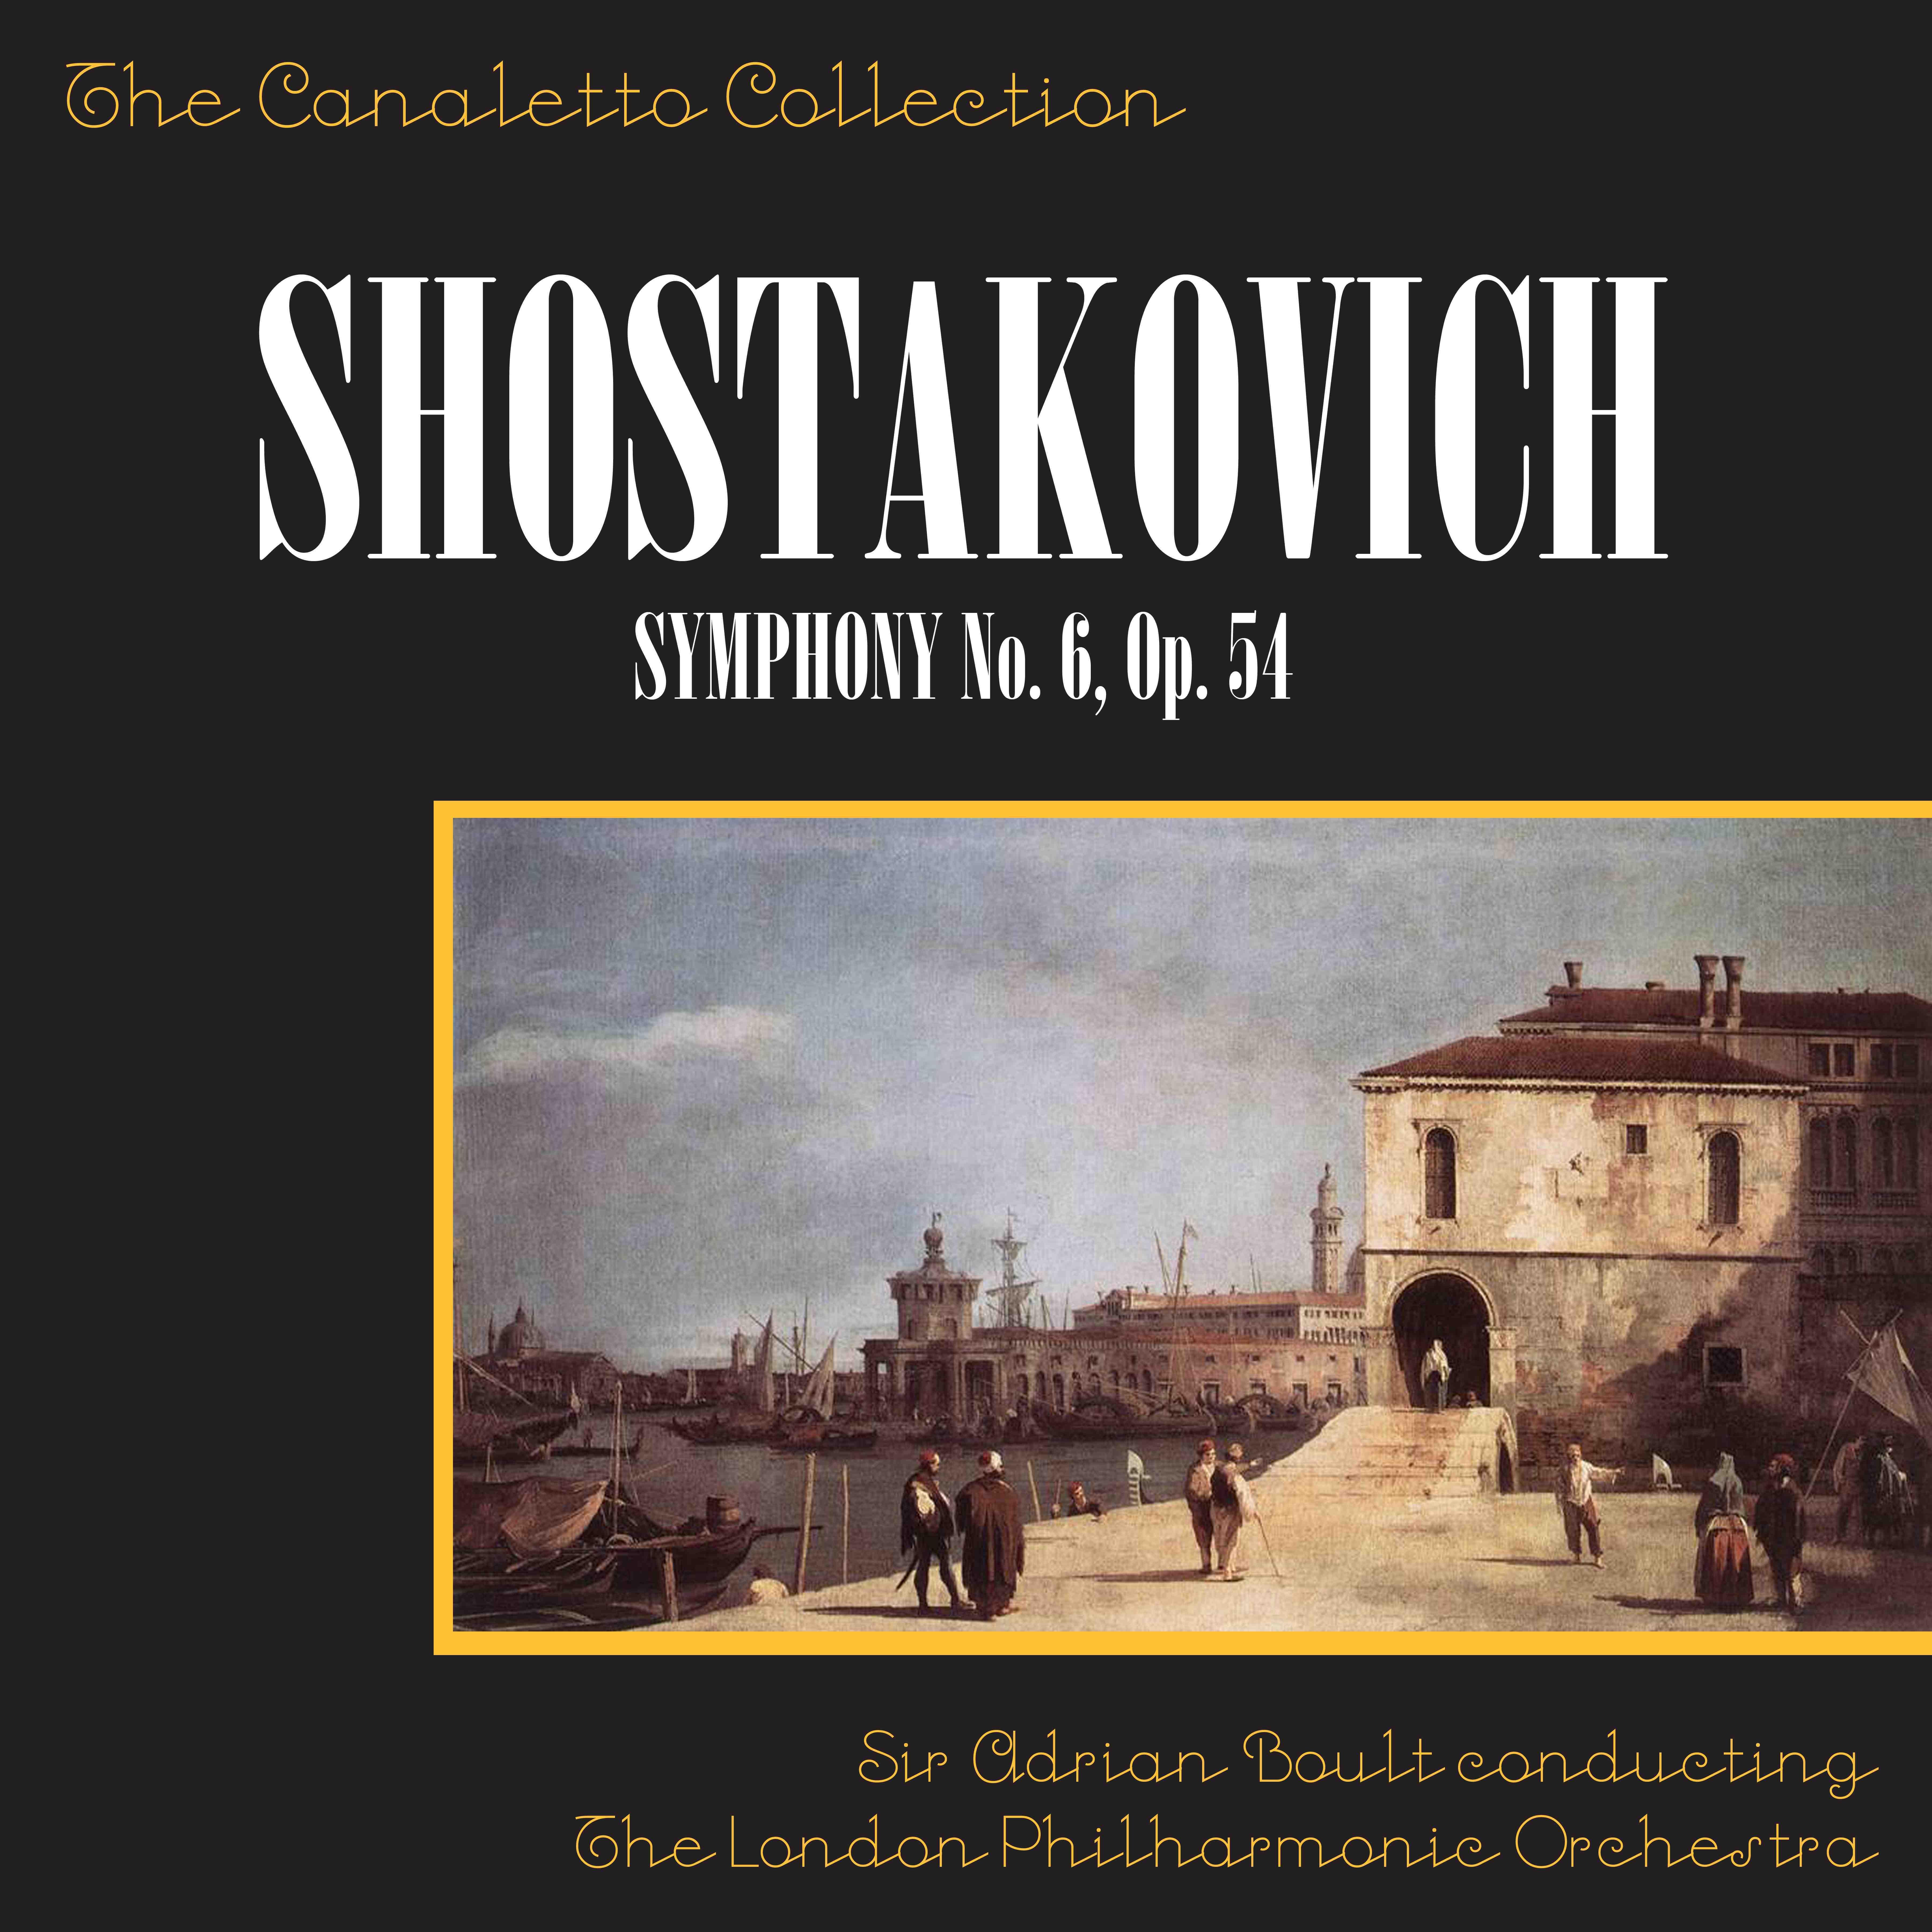 Shostakovich: Symphony No. 6, Op. 54: 2nd Movement - Allegro